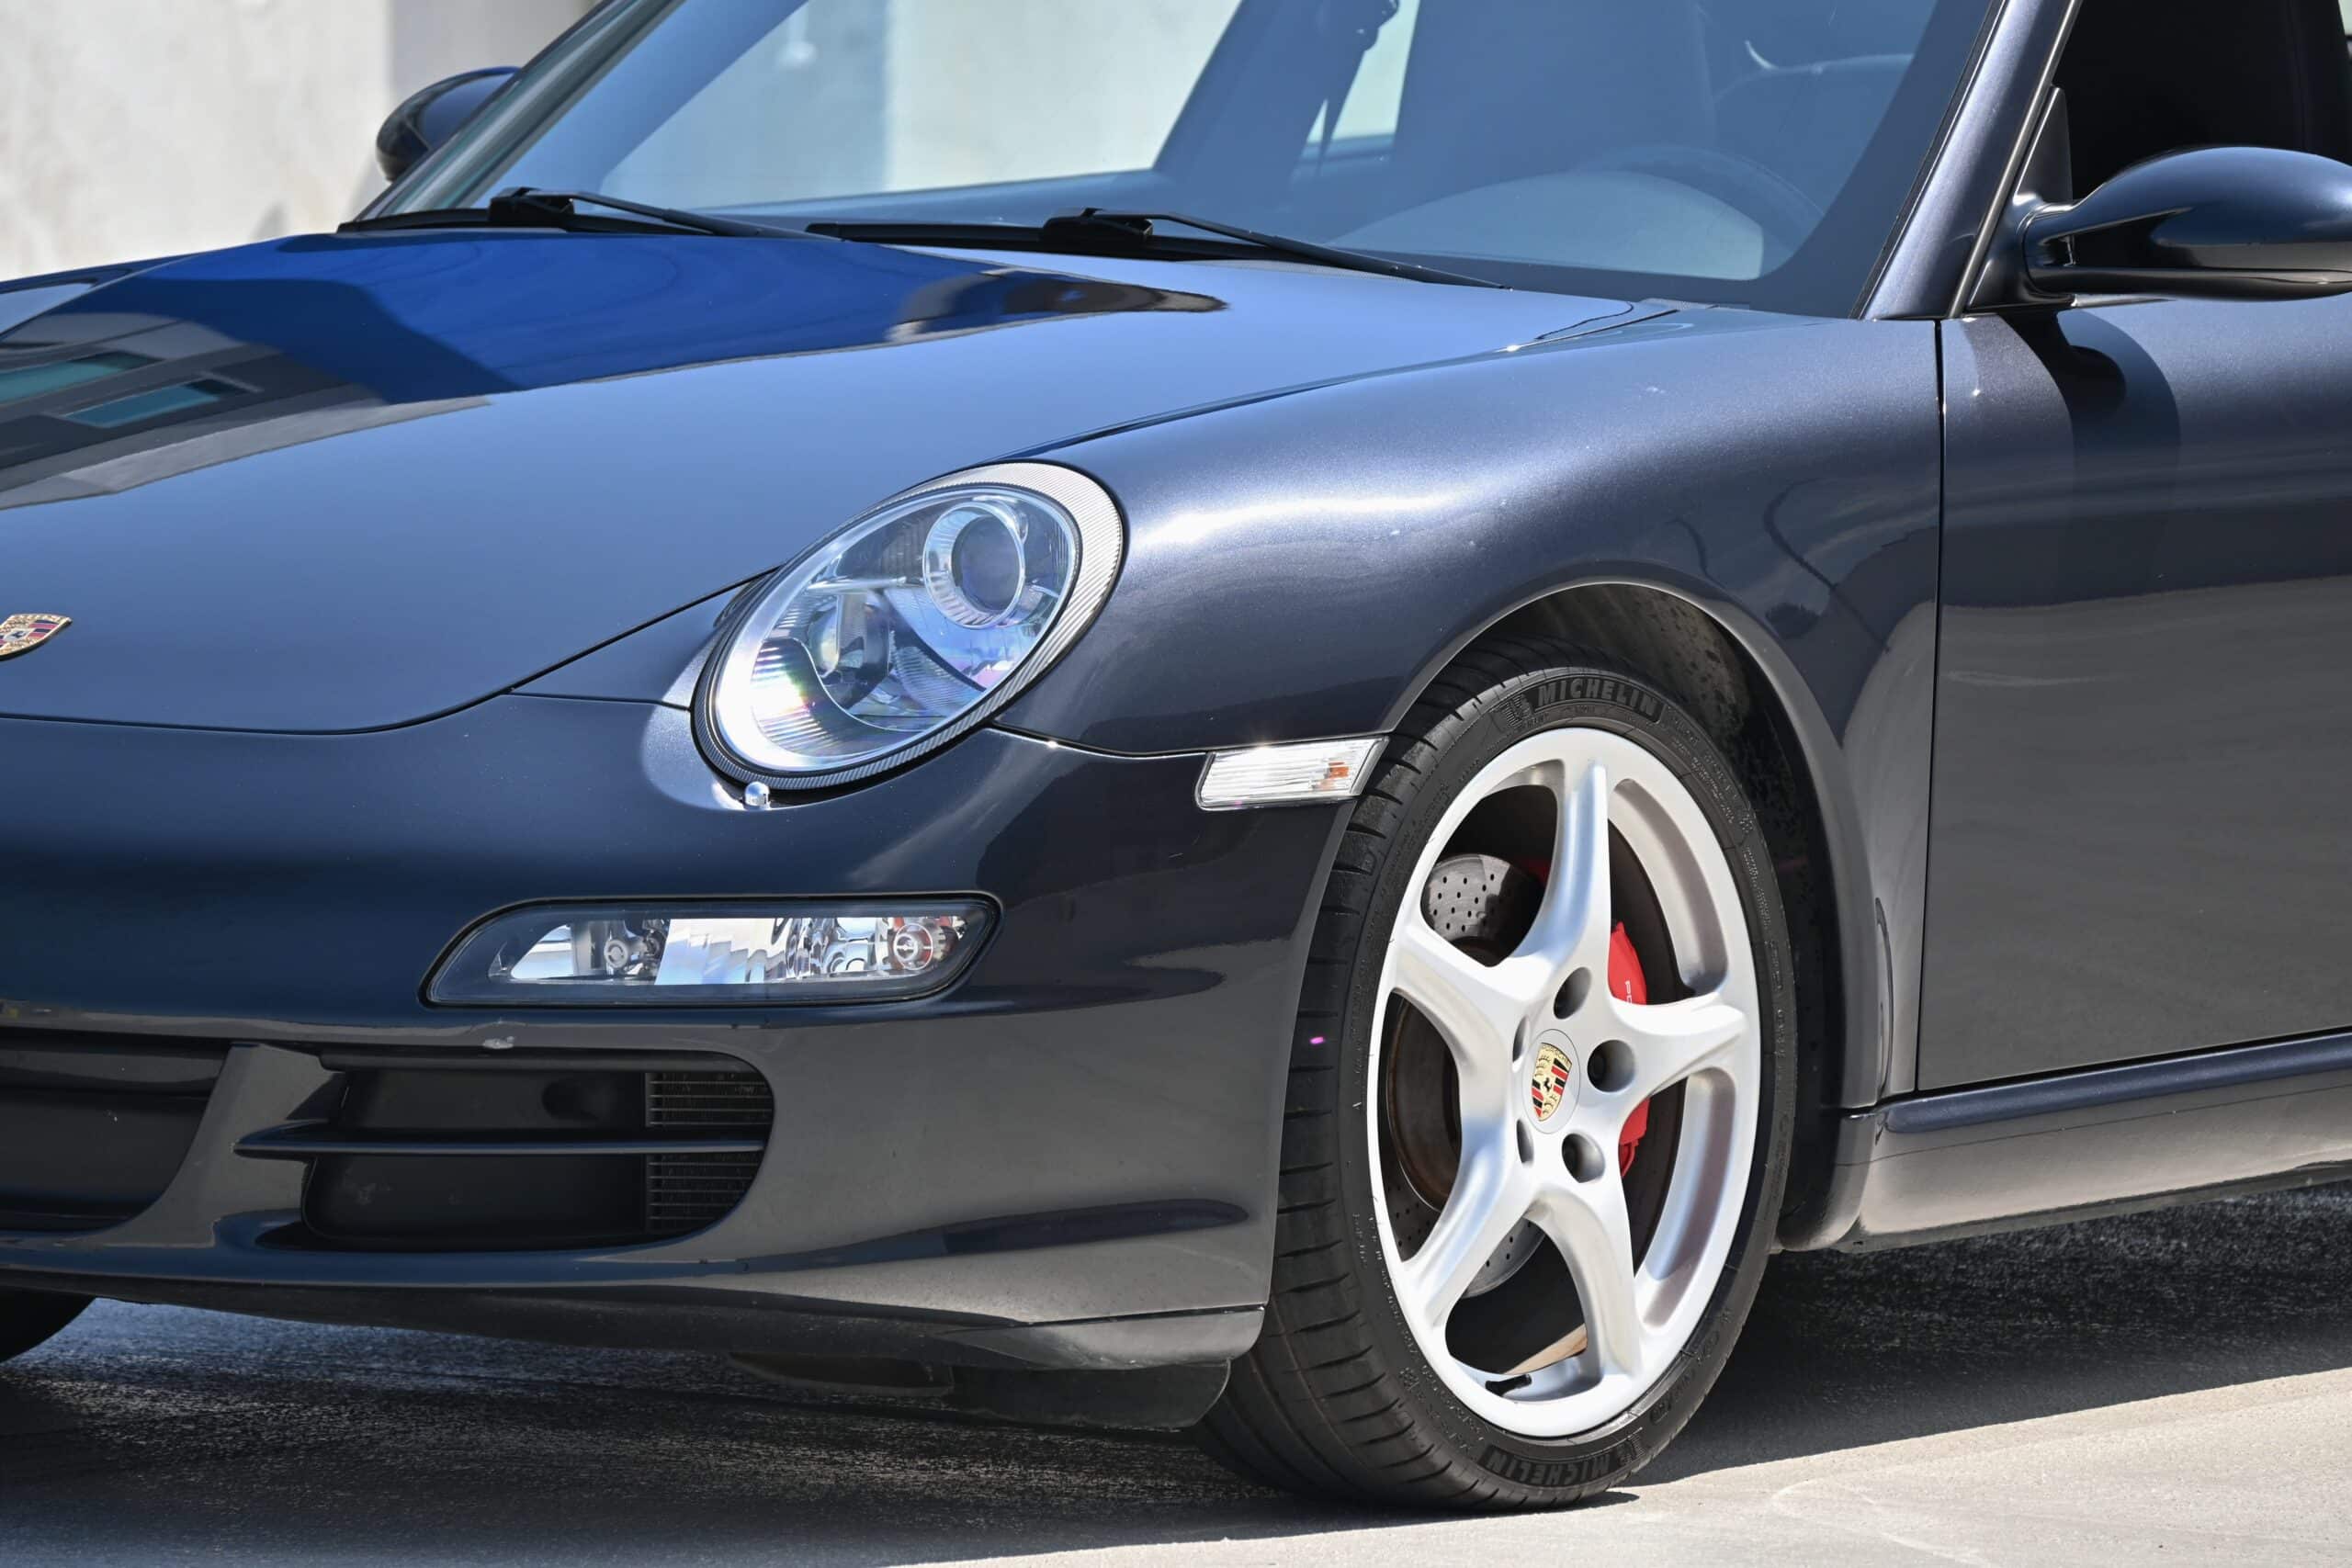 2005 Porsche 911 997.1 Carrera S Rare Atlas Gray On Sea Blue – 49K Miles – 4.0L Engine Upgrade – 6 Speed Manual